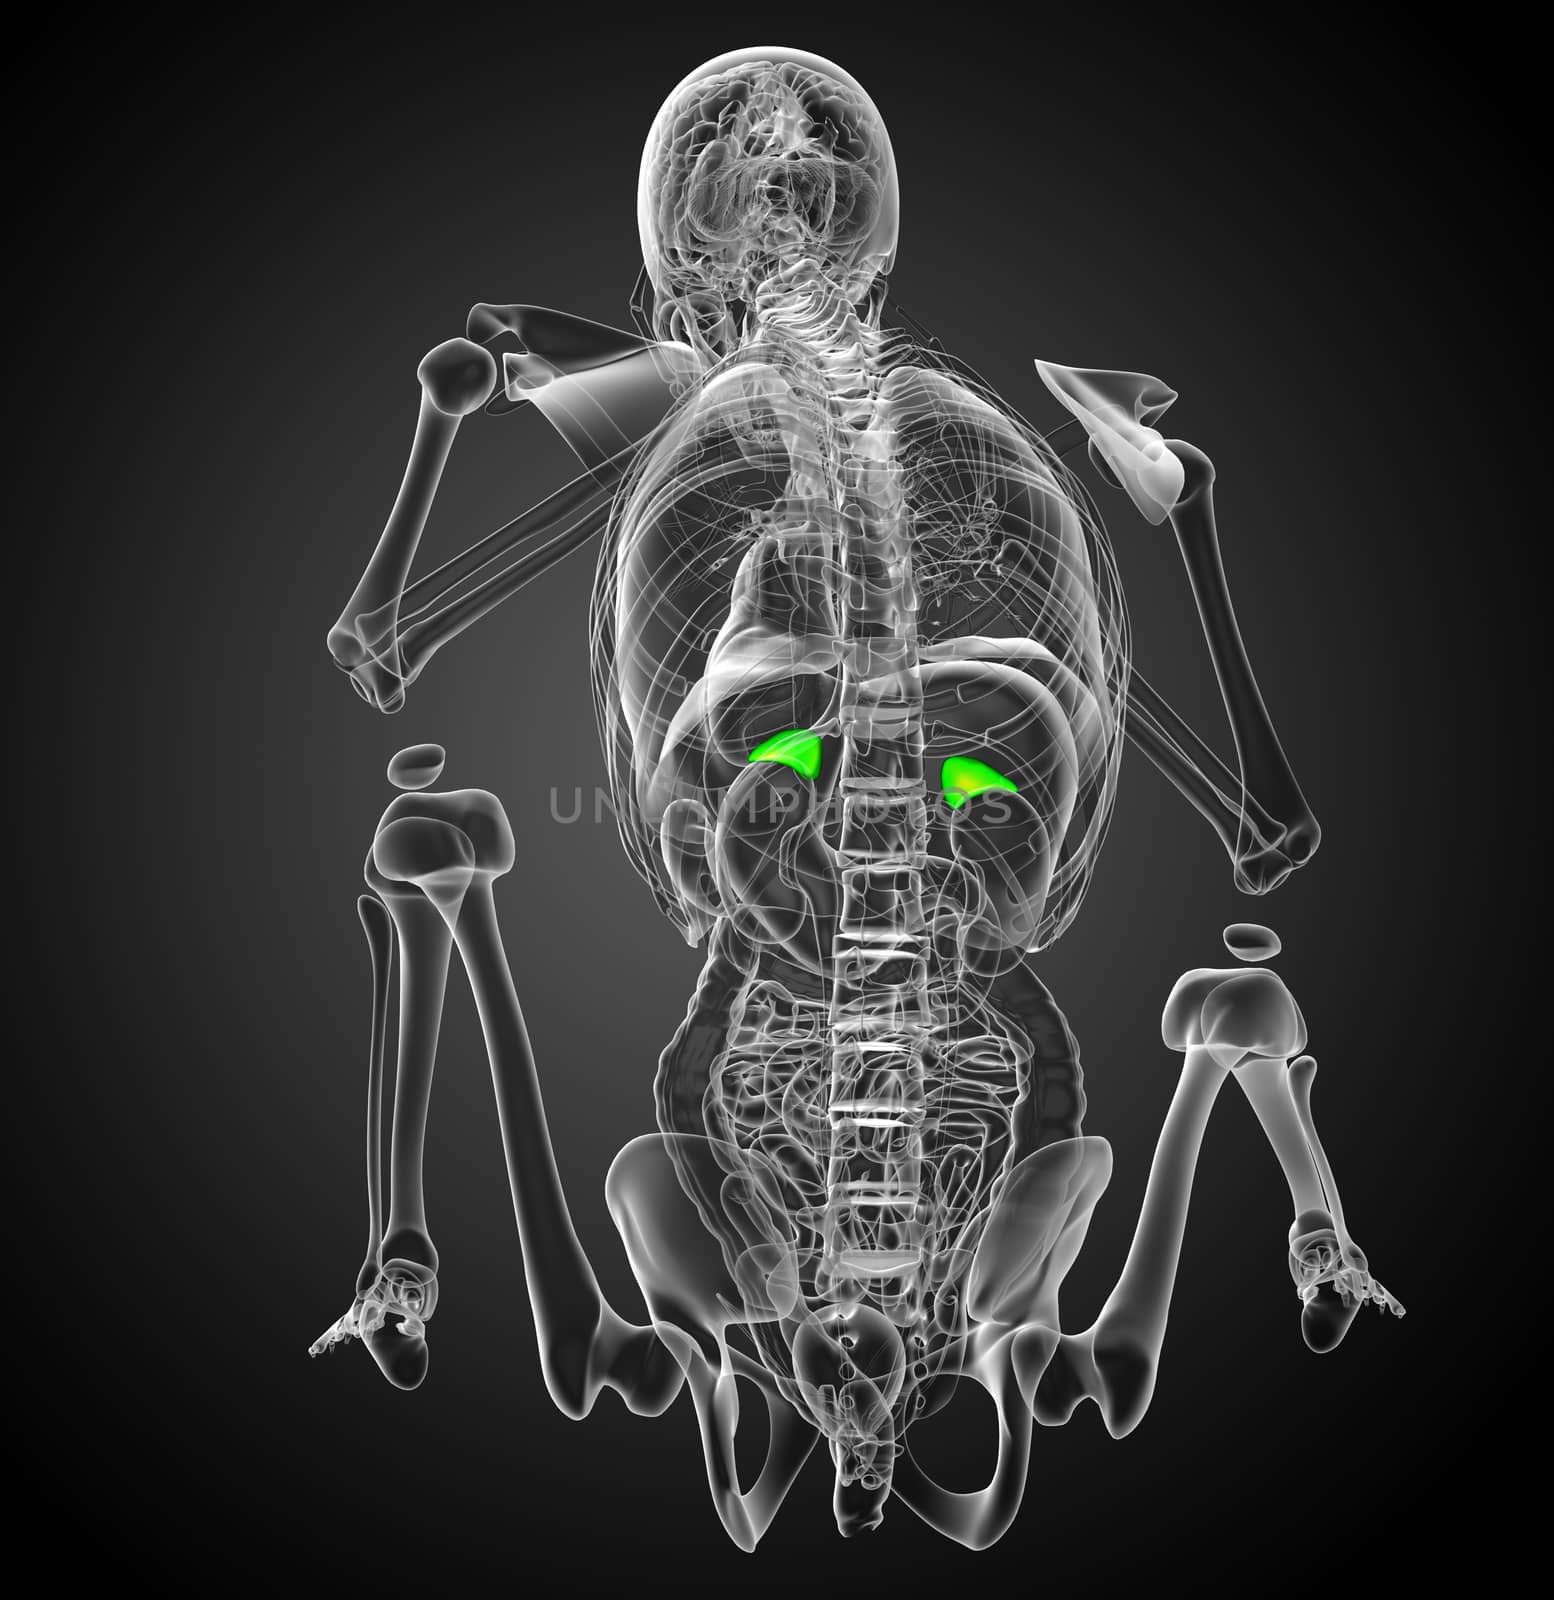 3d render medical illustration of the spleen - side view